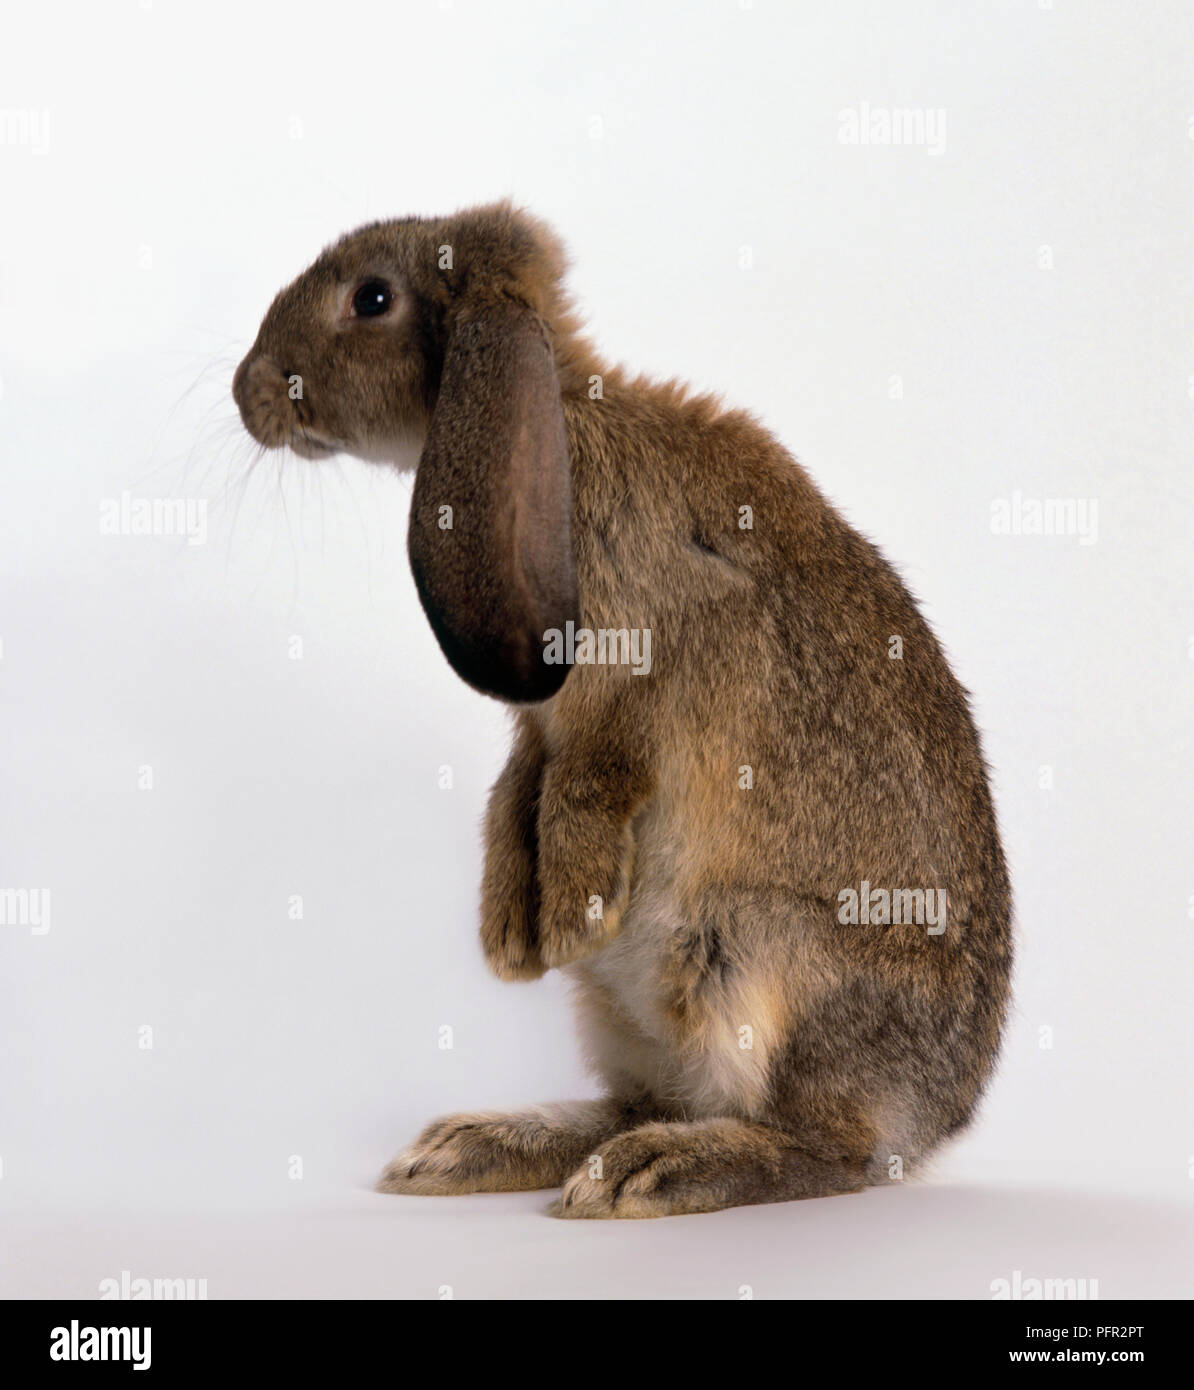 eared bunny